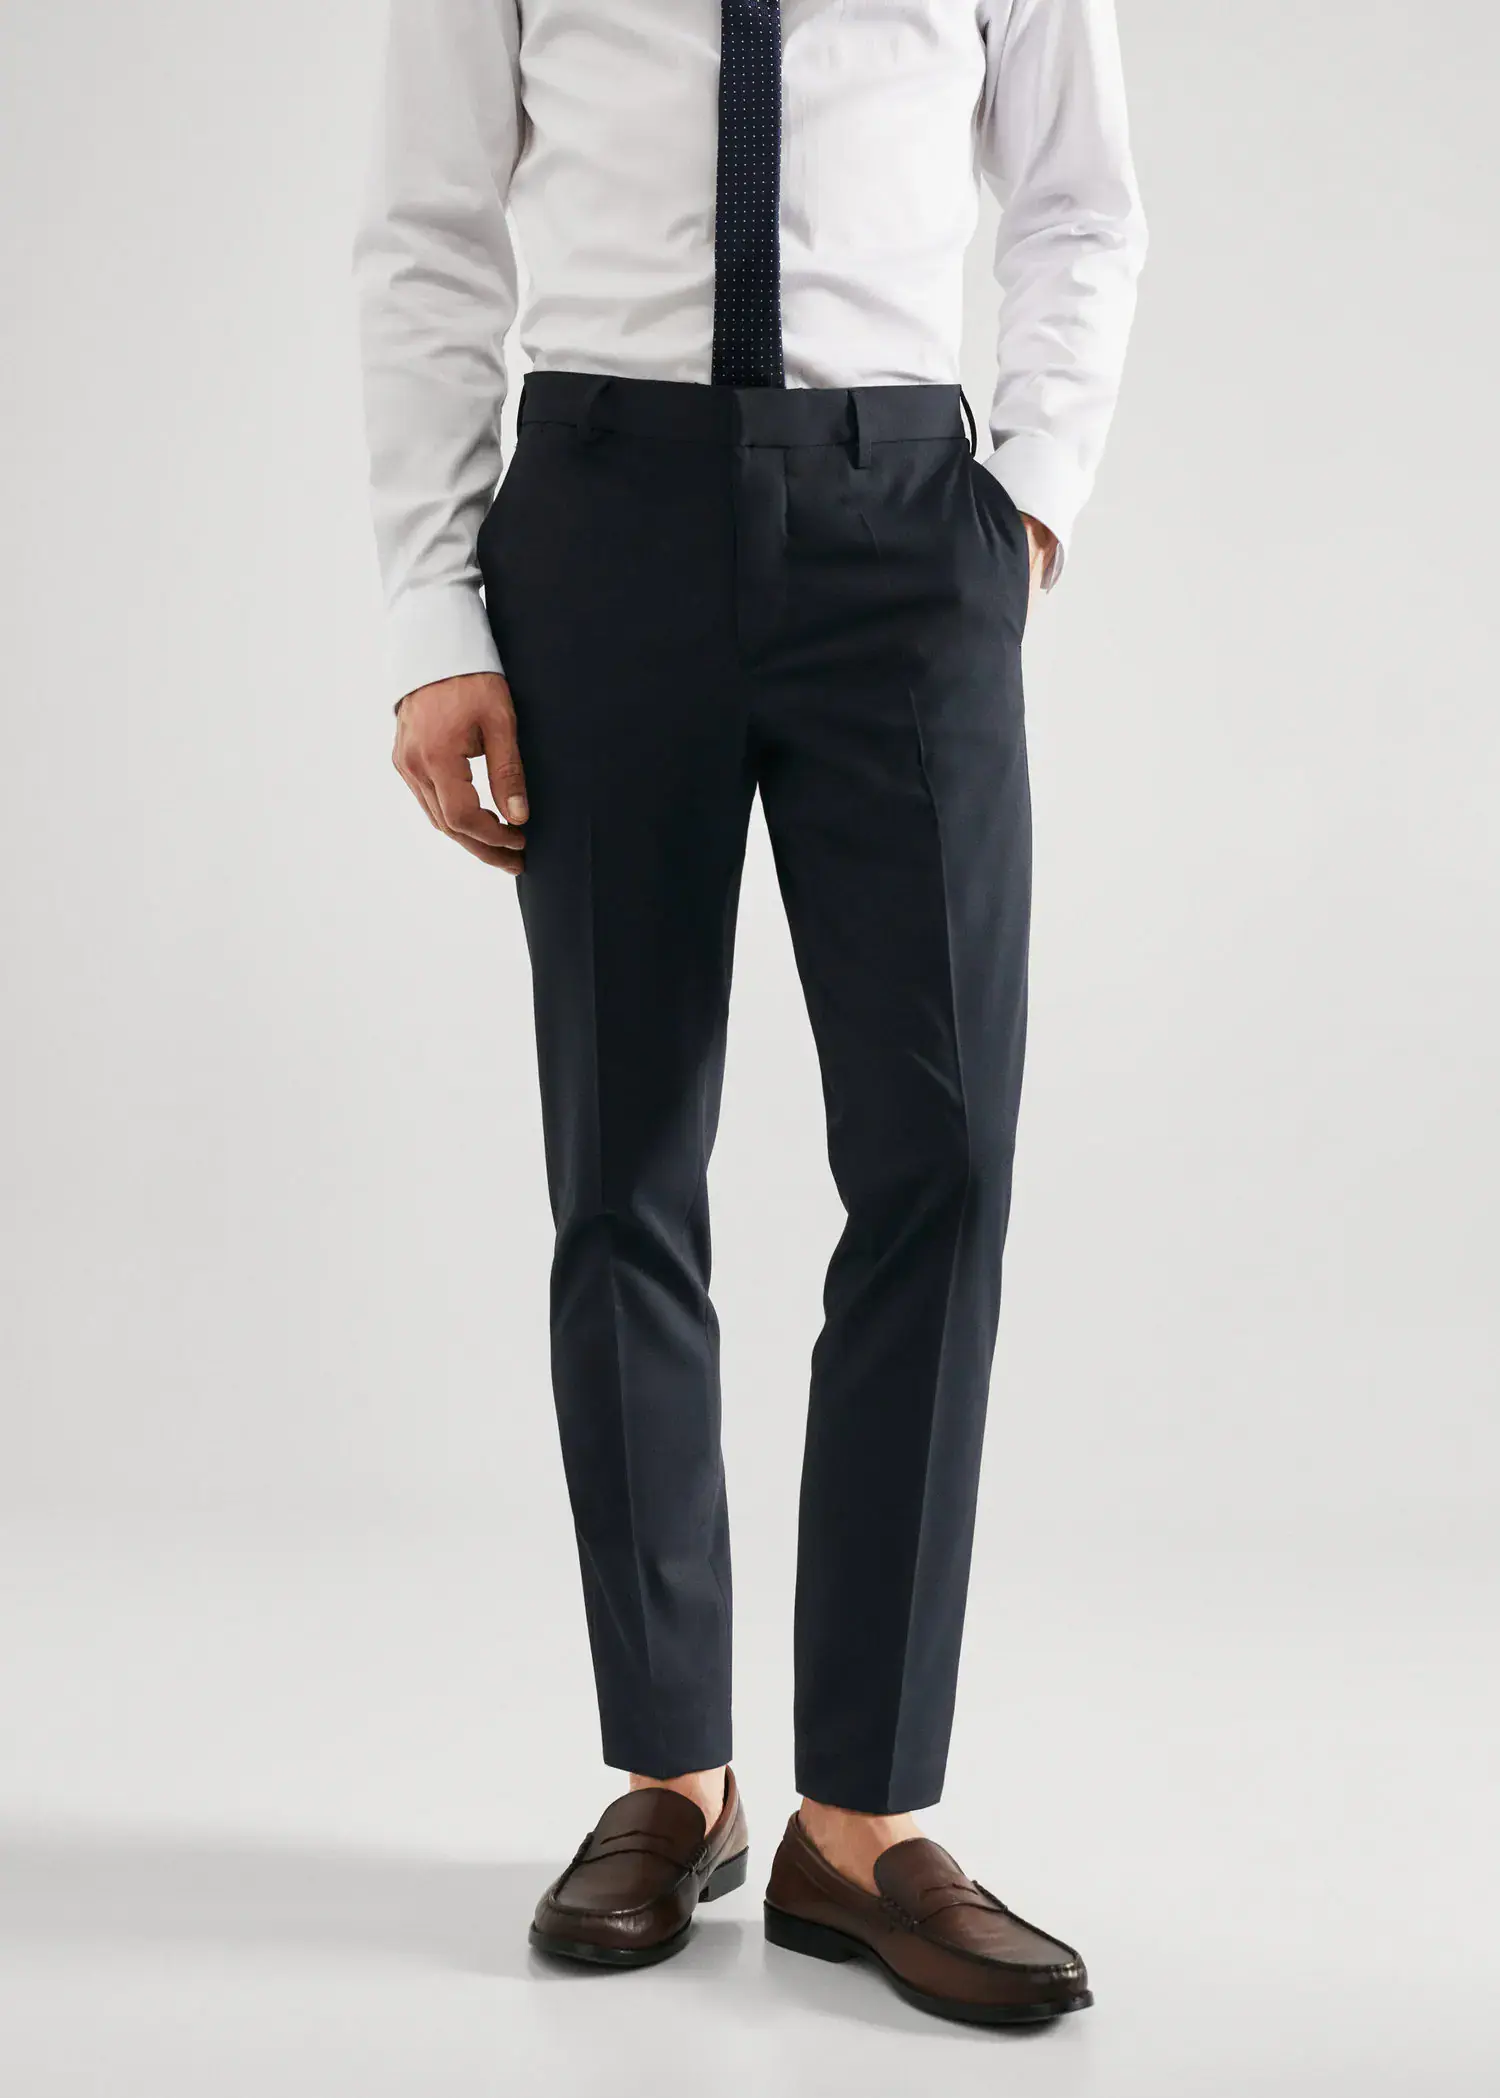 Mango Super slim fit suit trousers. a man wearing a white dress shirt and black pants. 